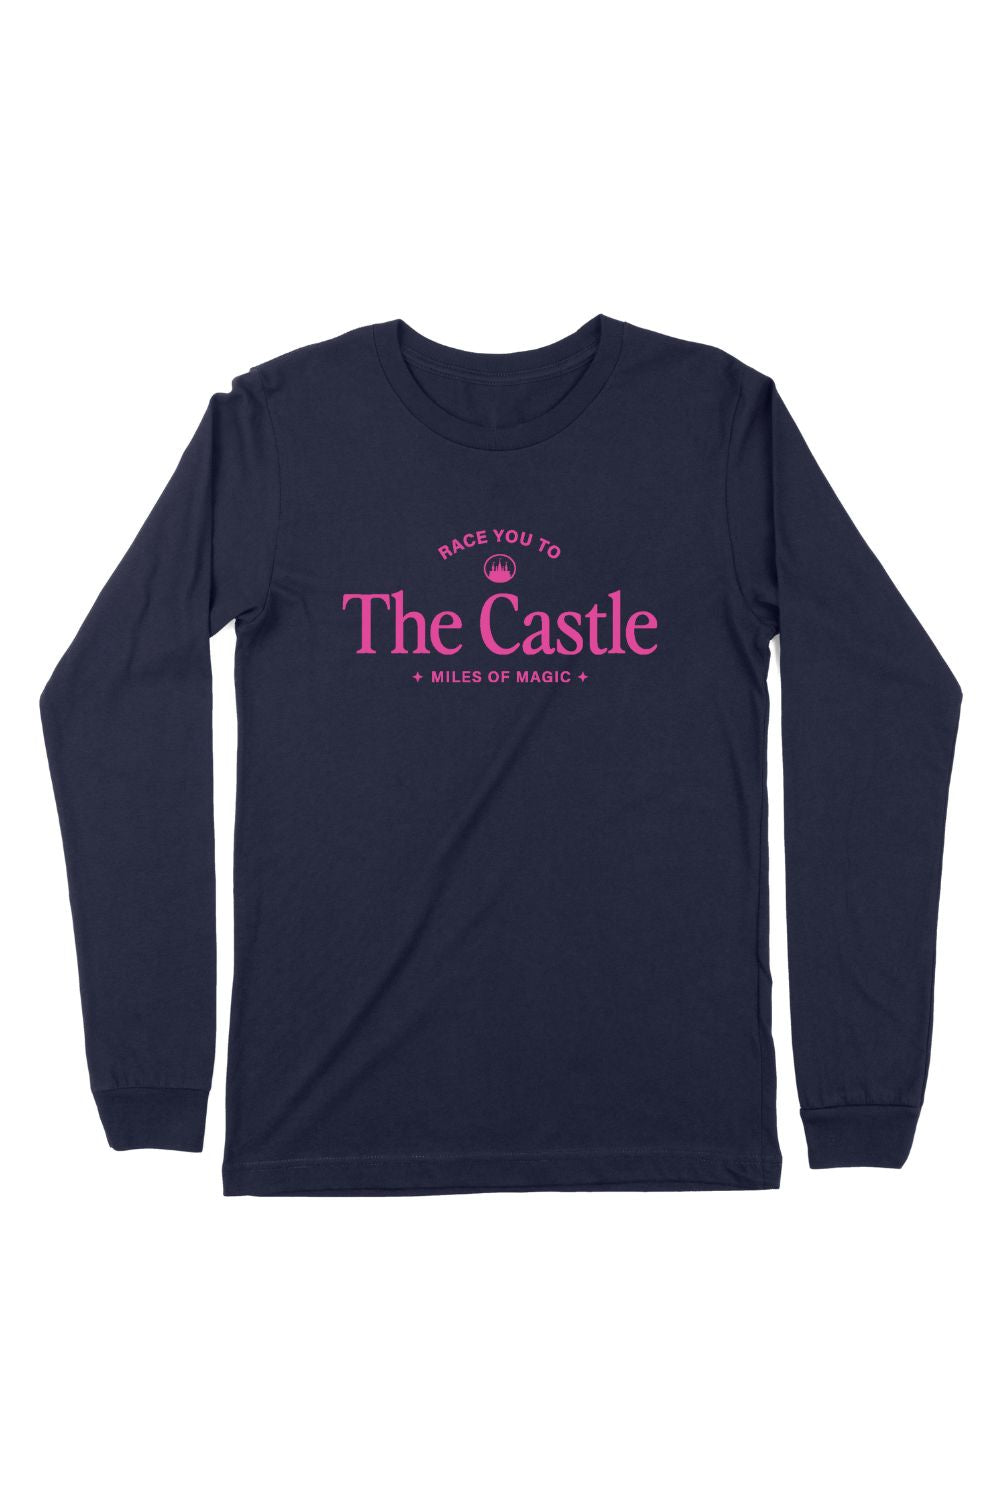 The Castle Long Sleeve